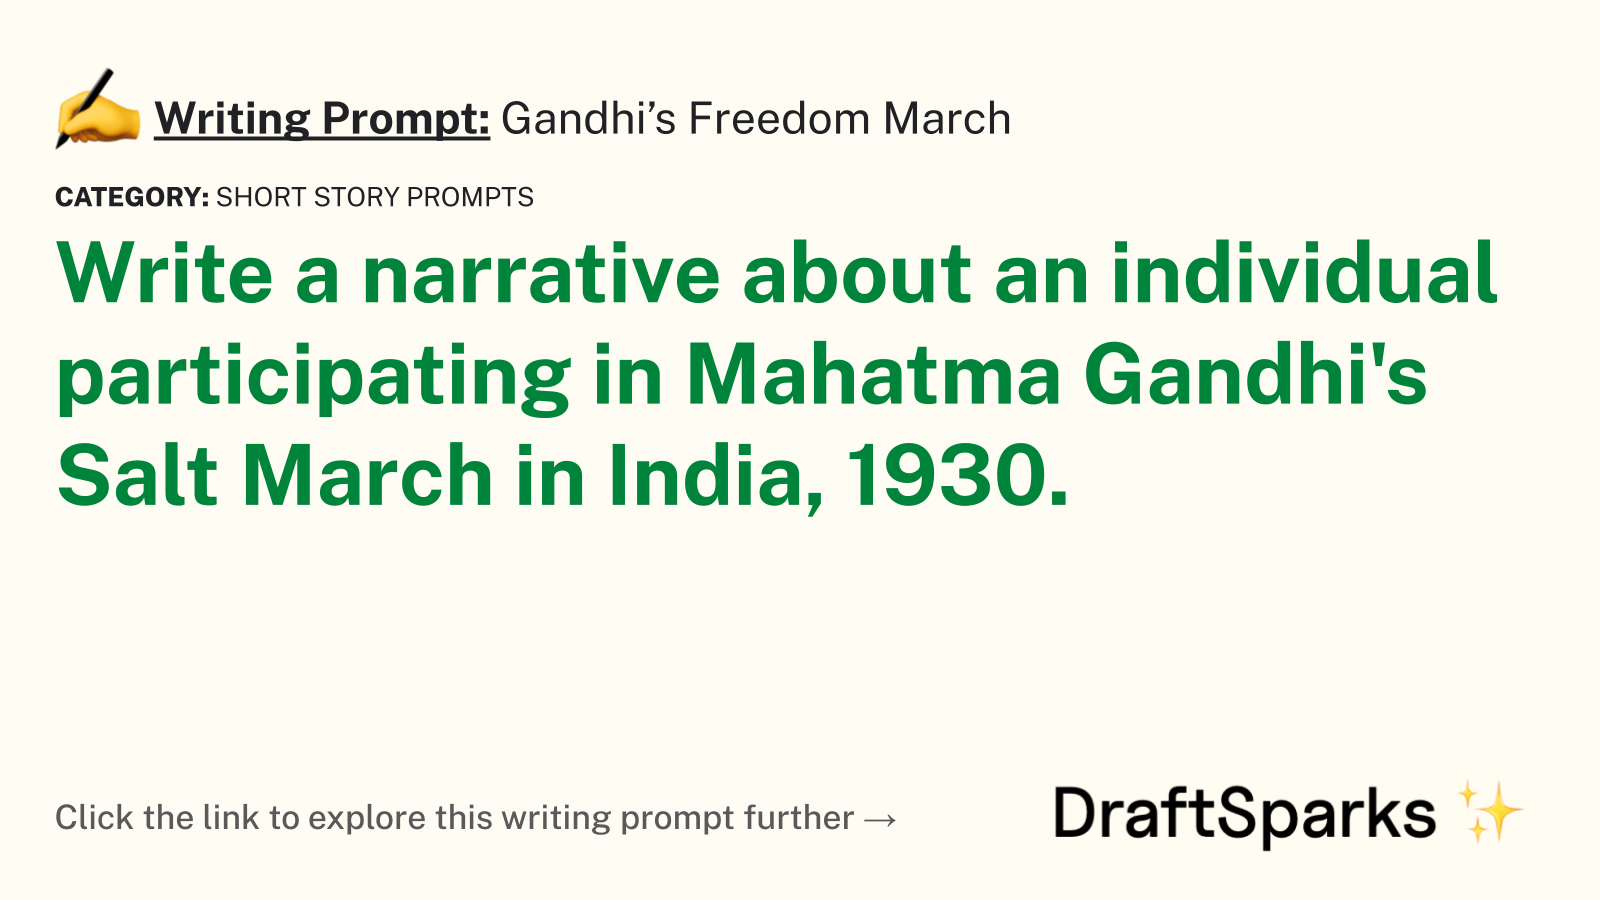 Gandhi’s Freedom March